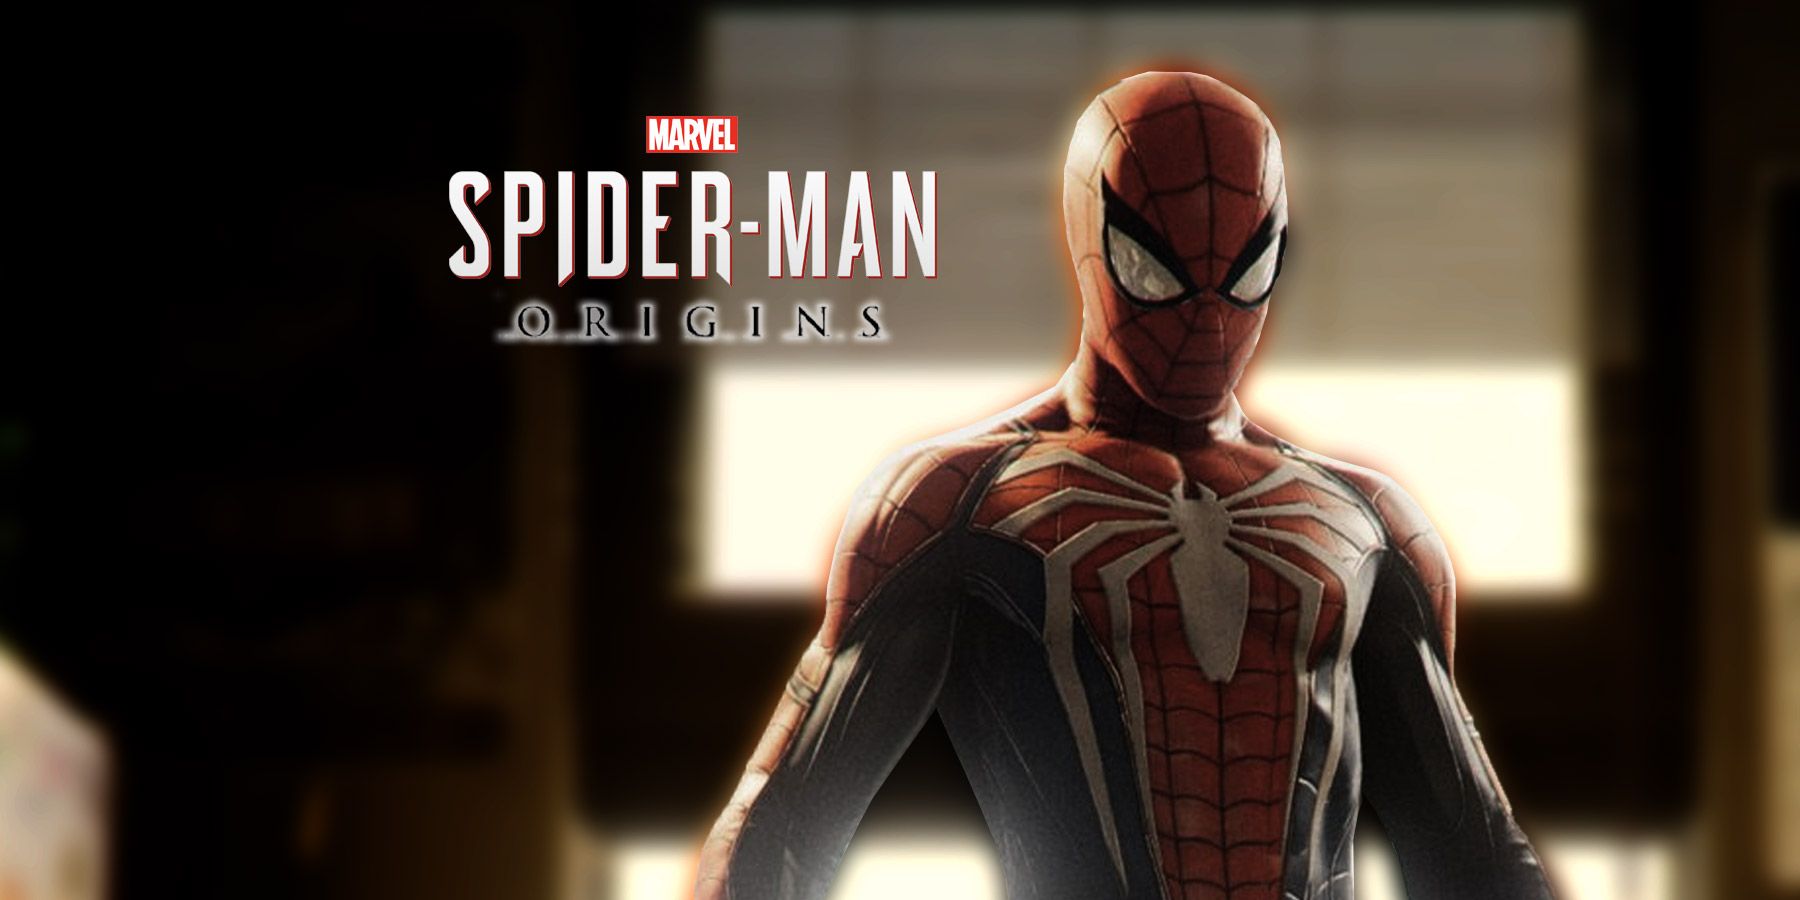 Marvel-ის Spider-Man-ის სერიას ბეტმენის მსგავსი პრიკველი უნდა ჰქონდეს: Arkham Origins